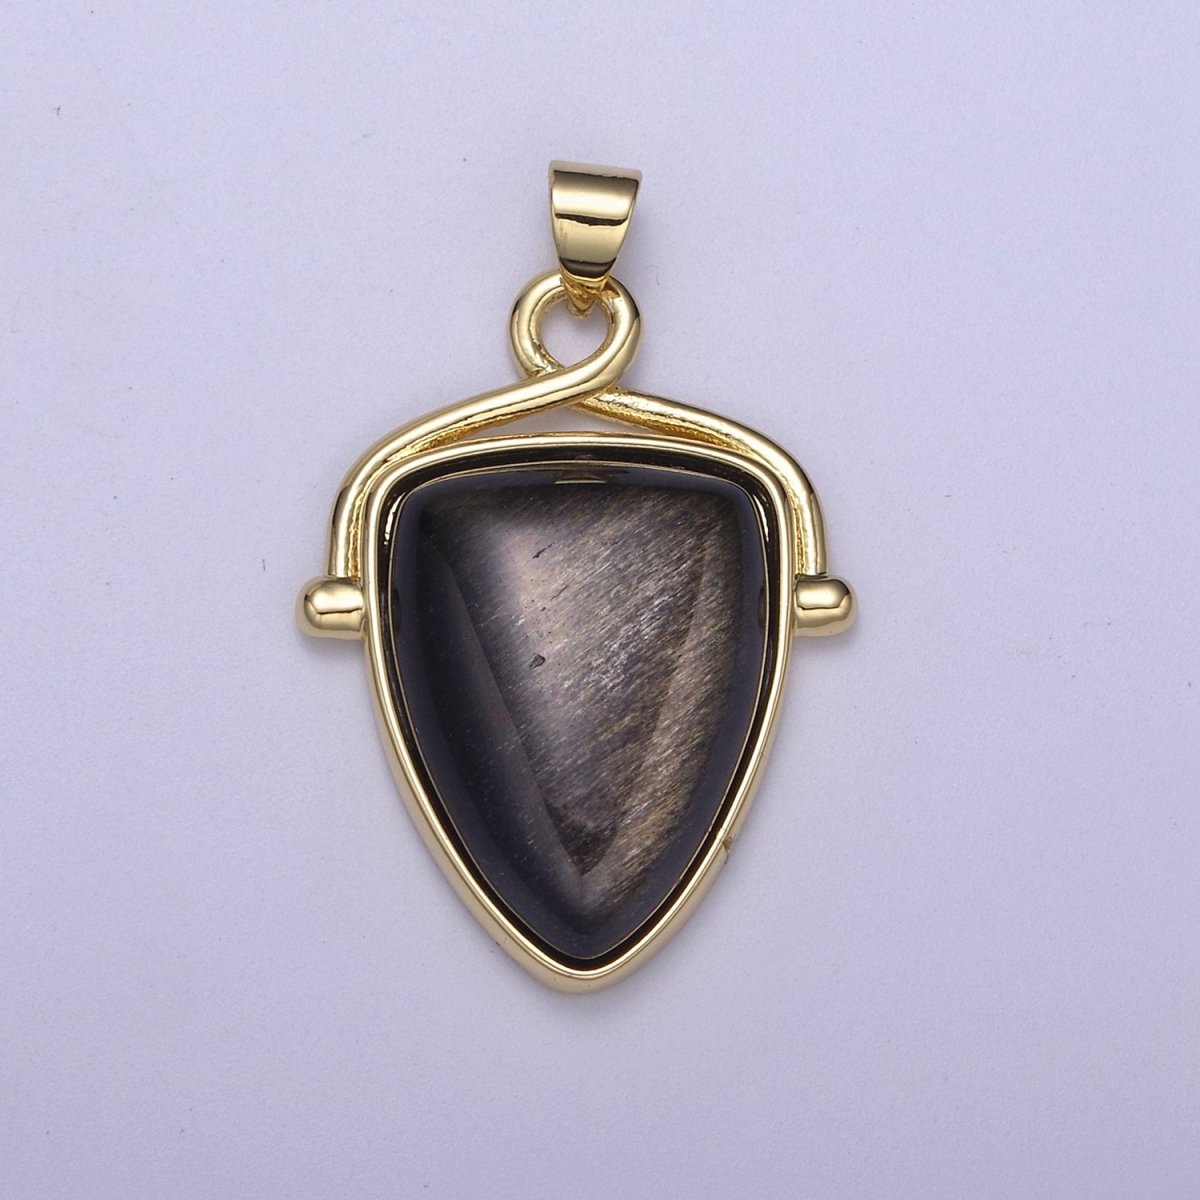 Black Onyx Pendant Shield Charm for Statement Necklace Jewelry H-144 - DLUXCA